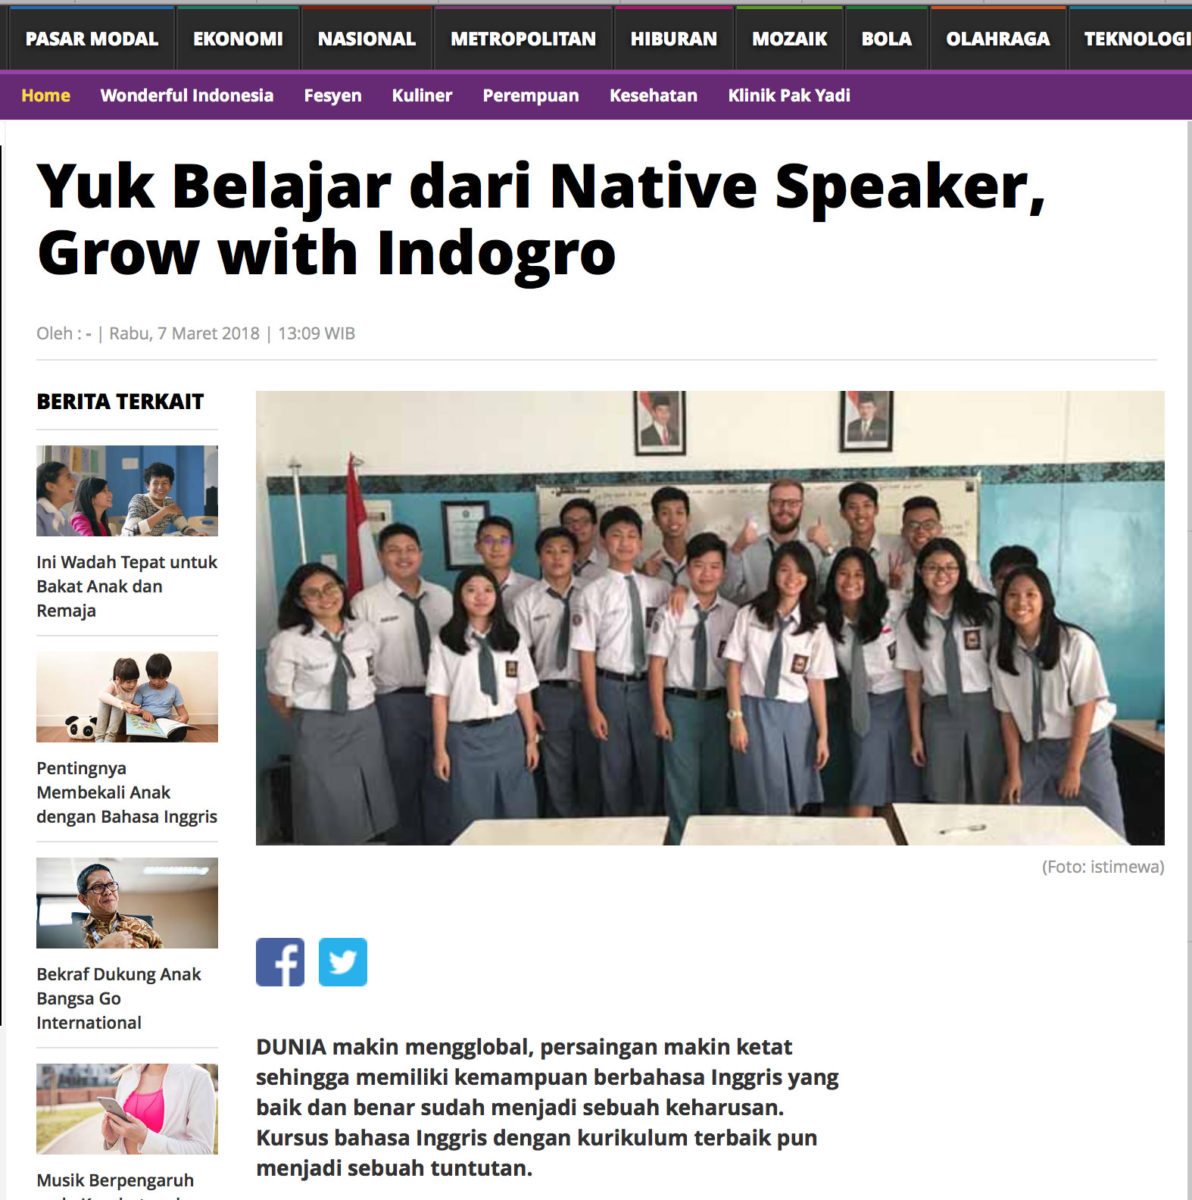 Yuk Belajar dari Native Speaker, Grow with Indogro